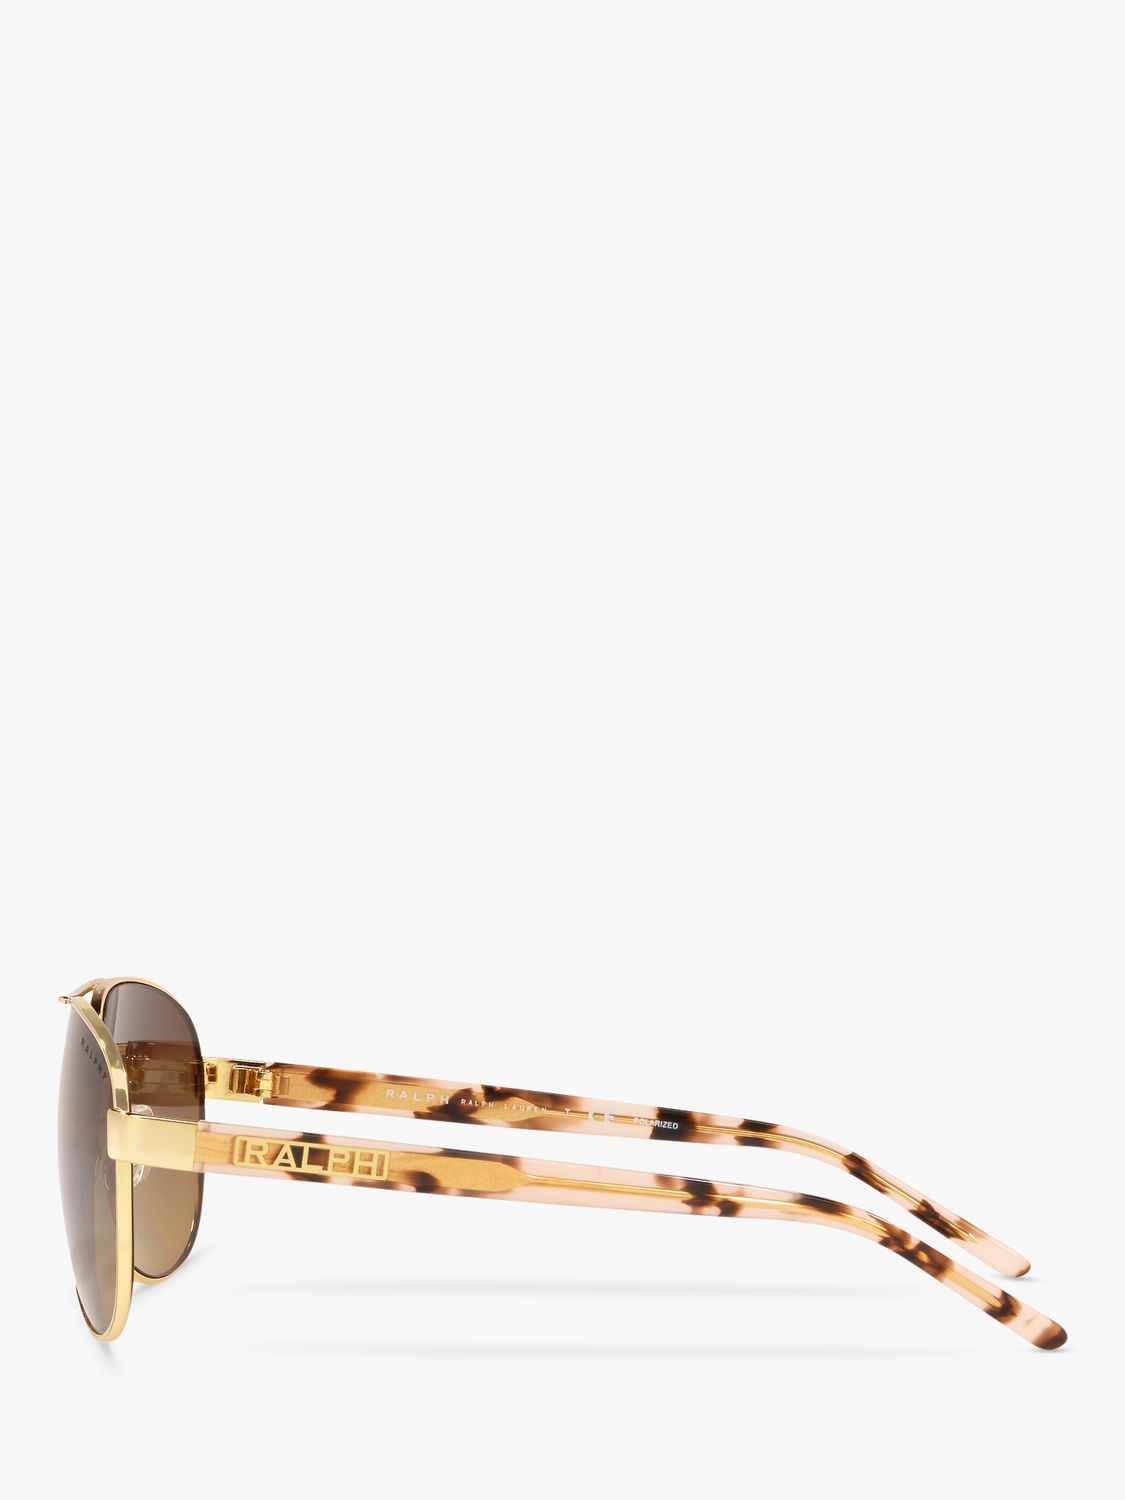 Ralph Lauren RA4004 Women's Aviator Sunglasses, Gold/Brown